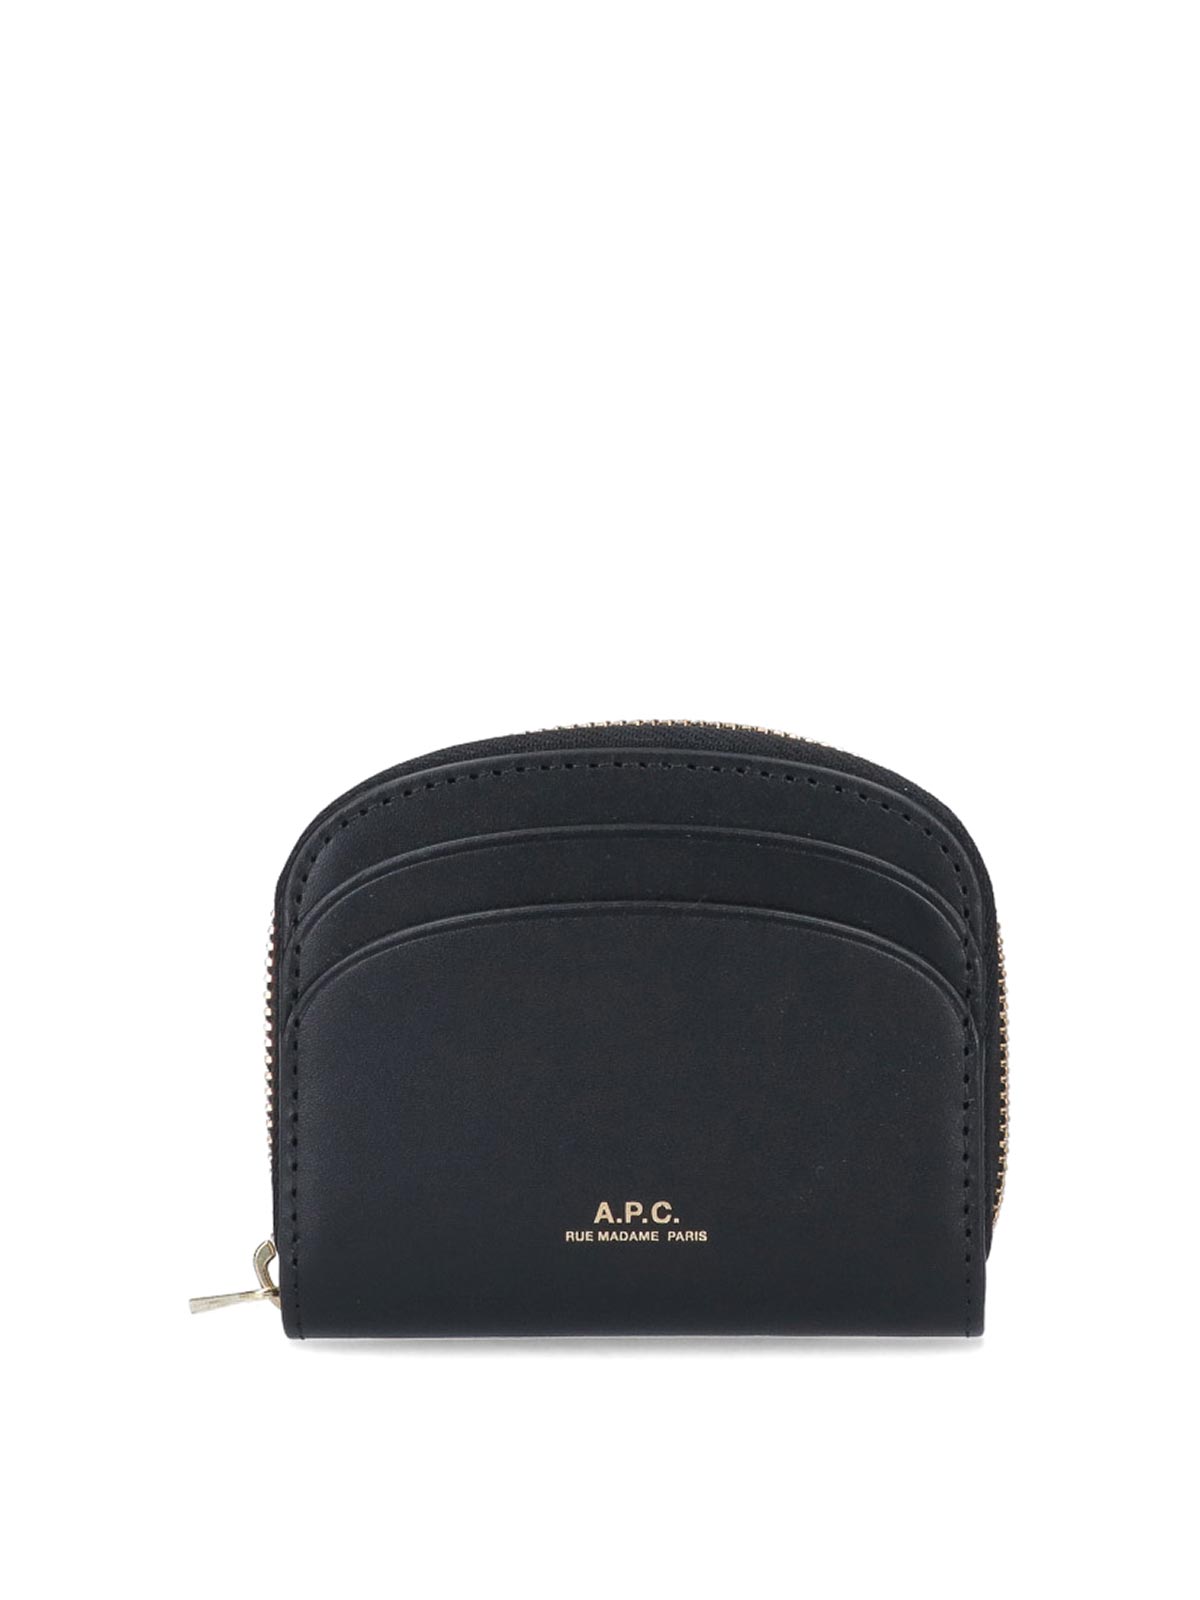 Apc Small Wallet In Black